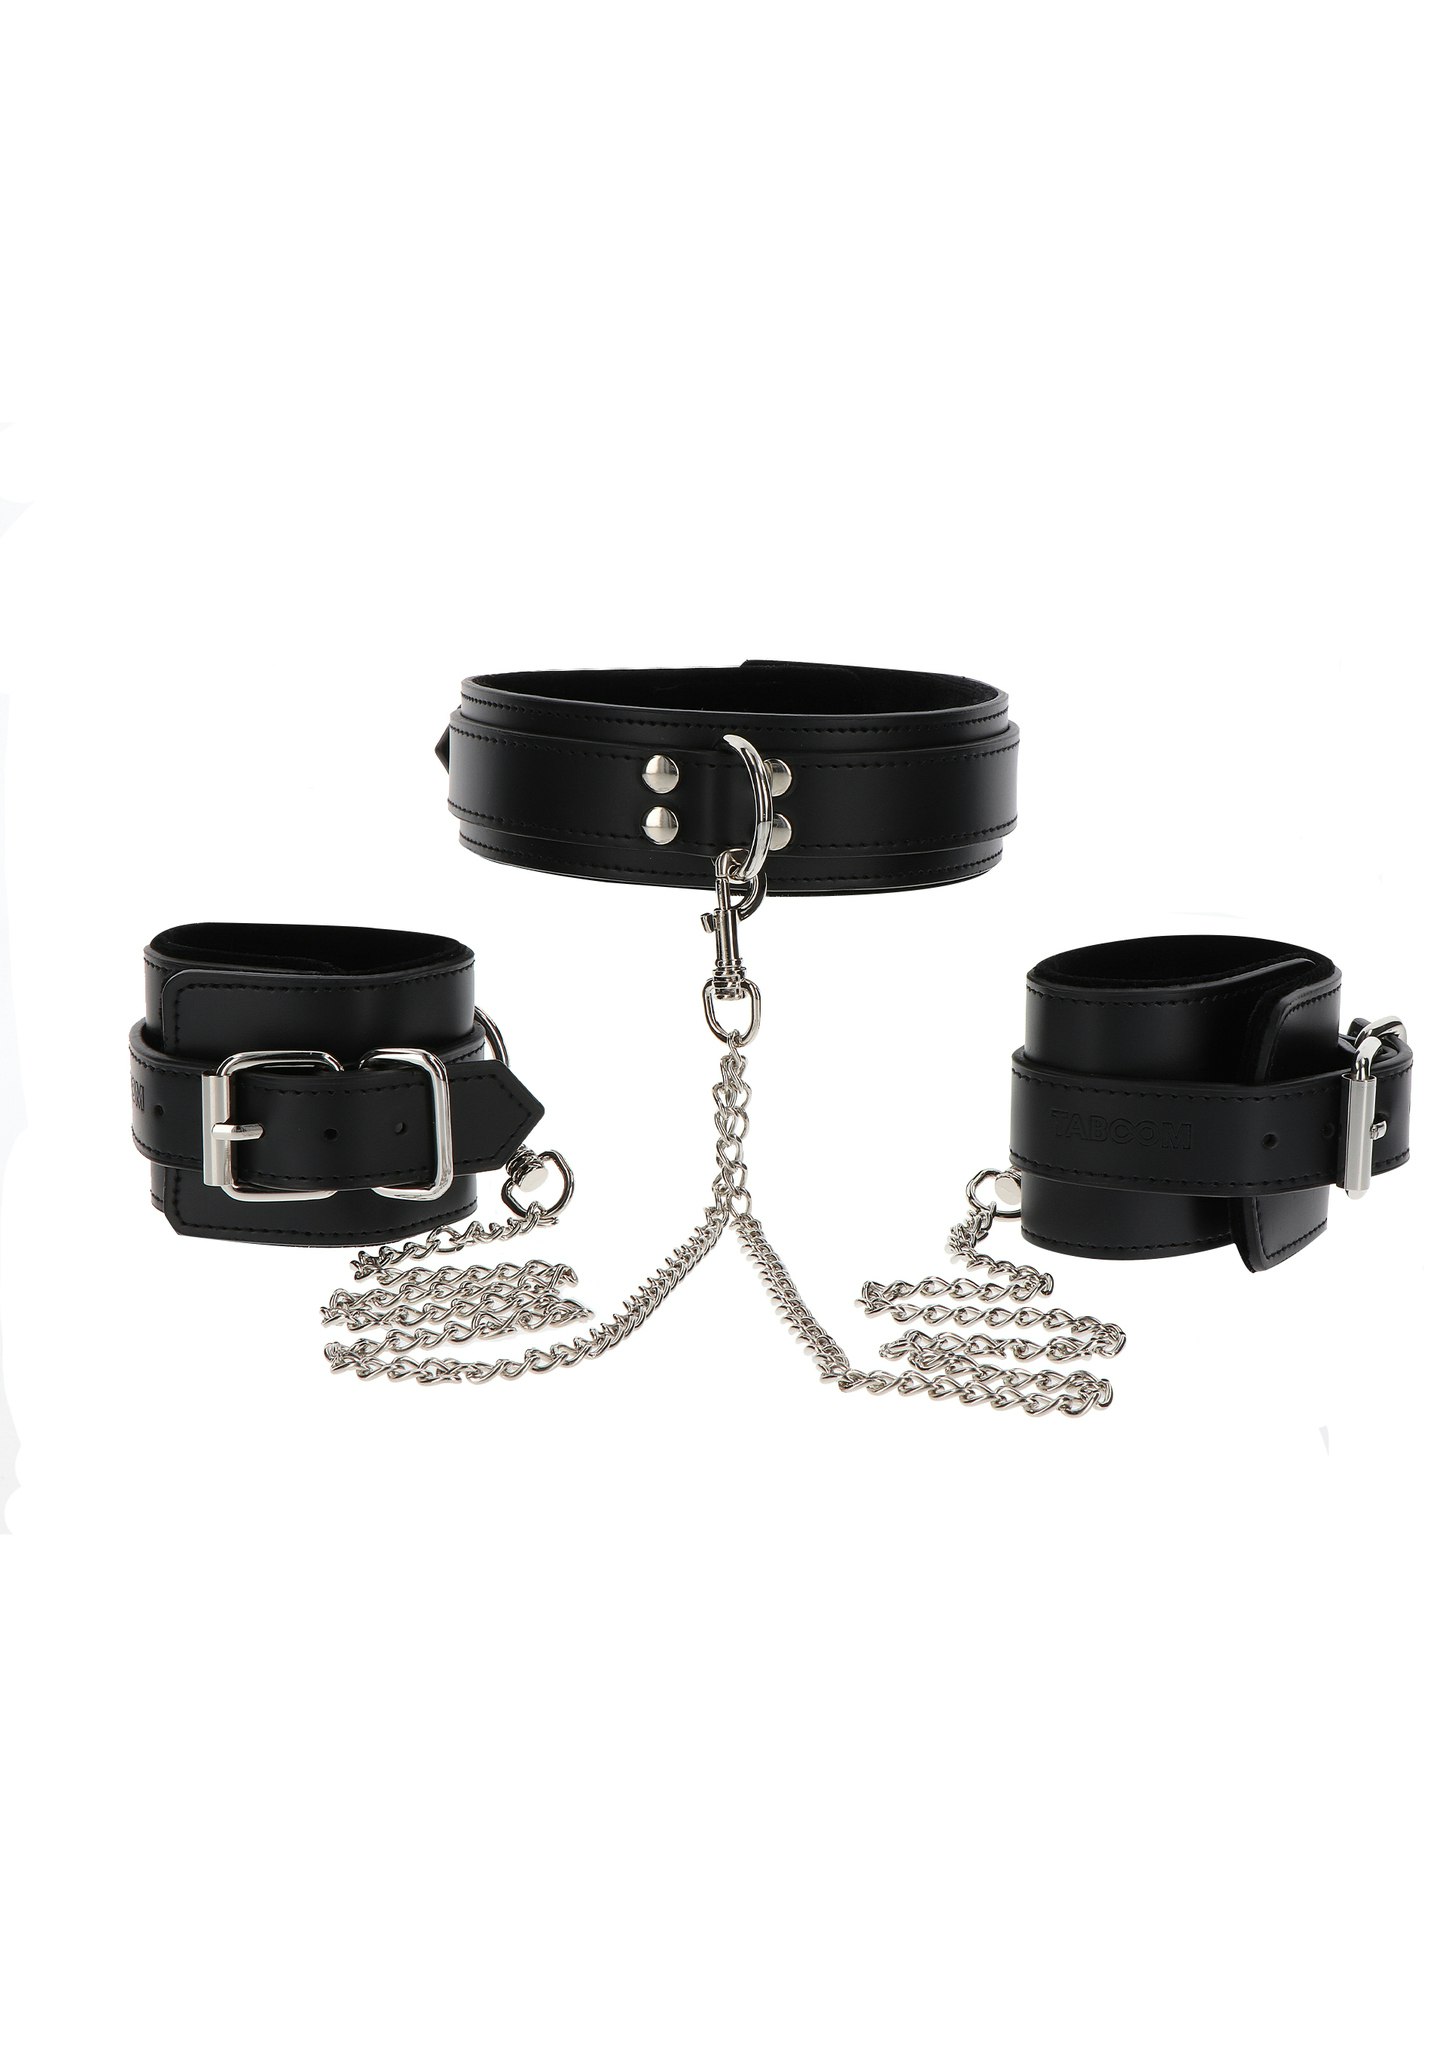 TABOOM - Heavy Collar and Wrist Cuffs, Black